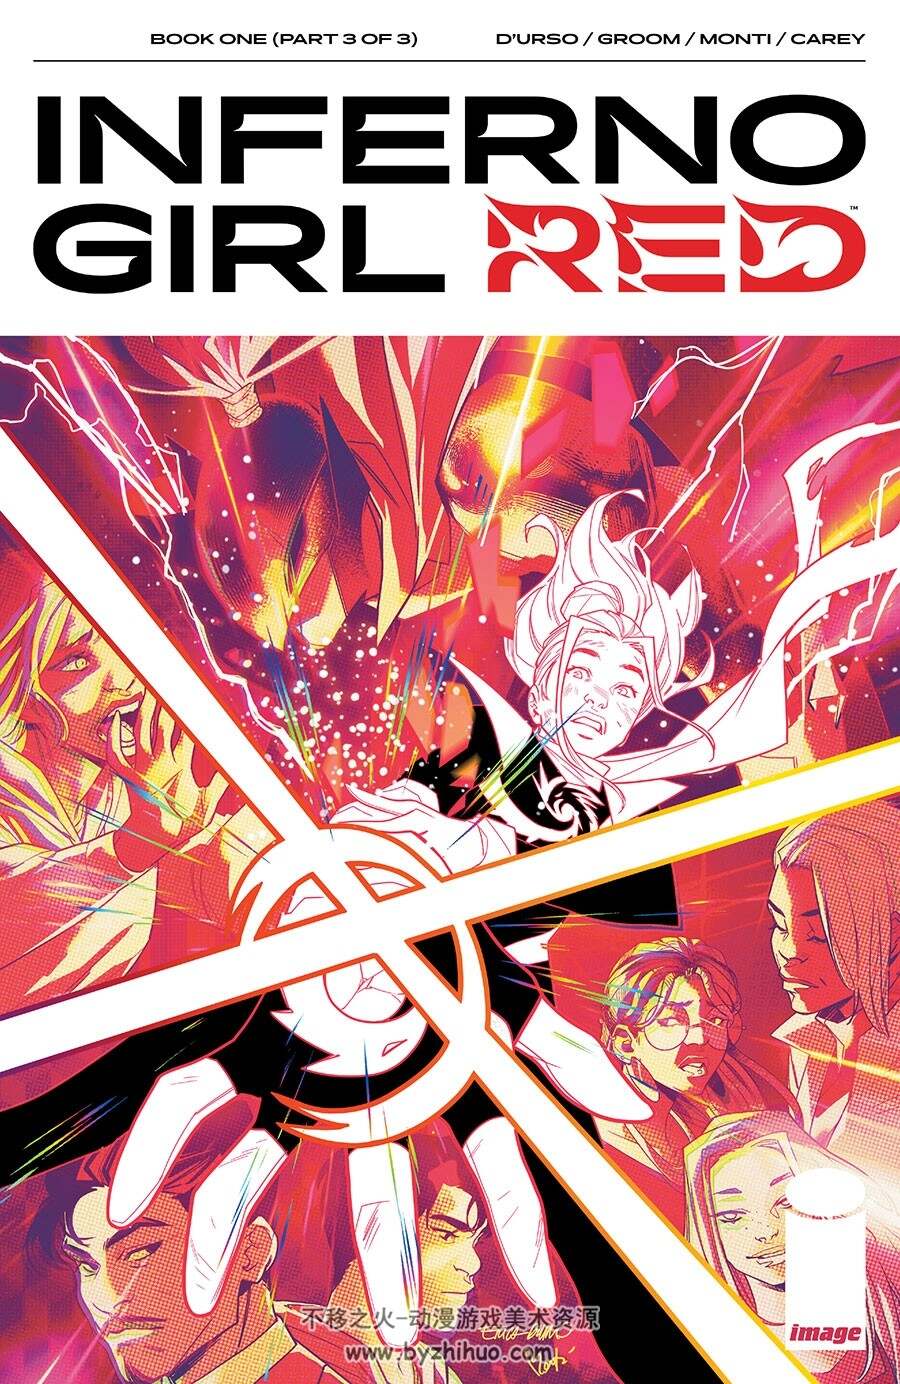 Inferno Girl Red 第3册 Mat Groom 漫画下载